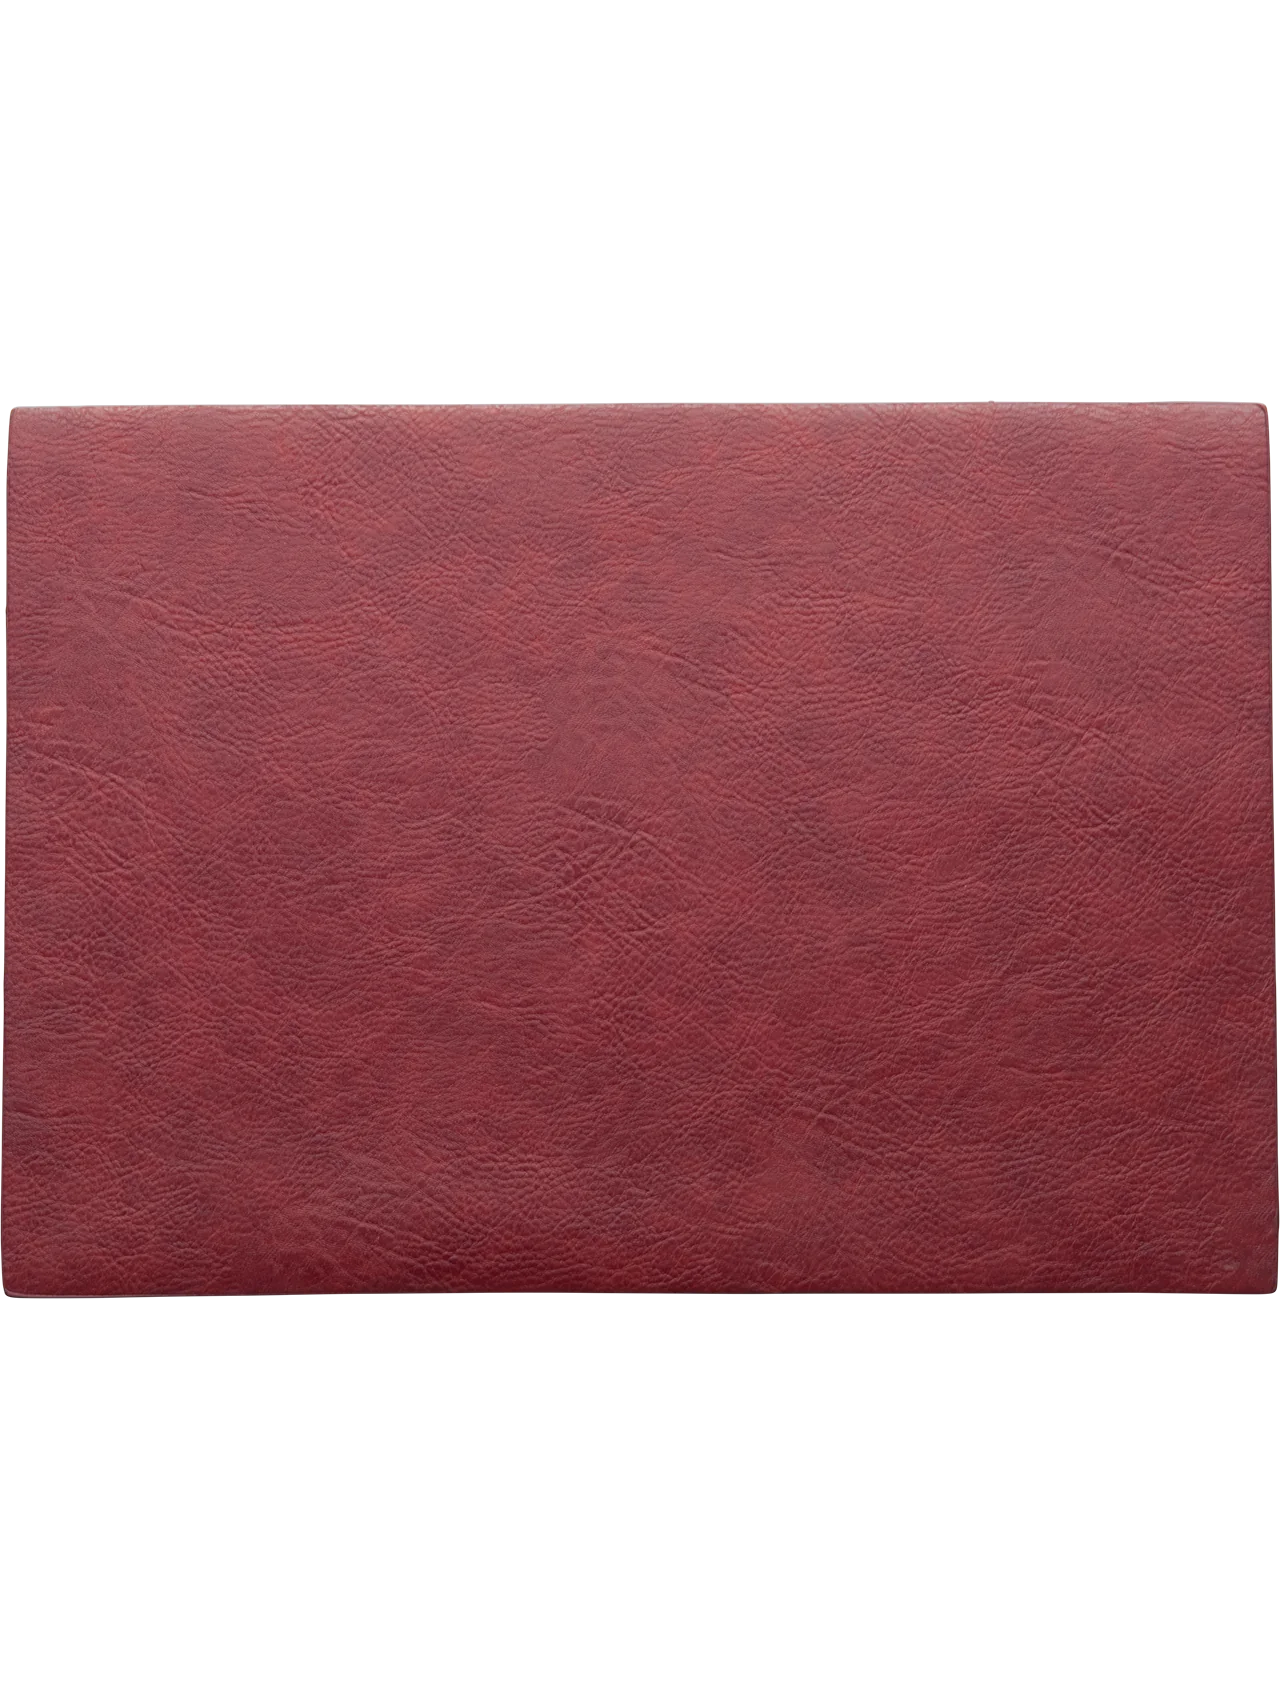 Tischset, rosewood 46x33 cm, Platzset 